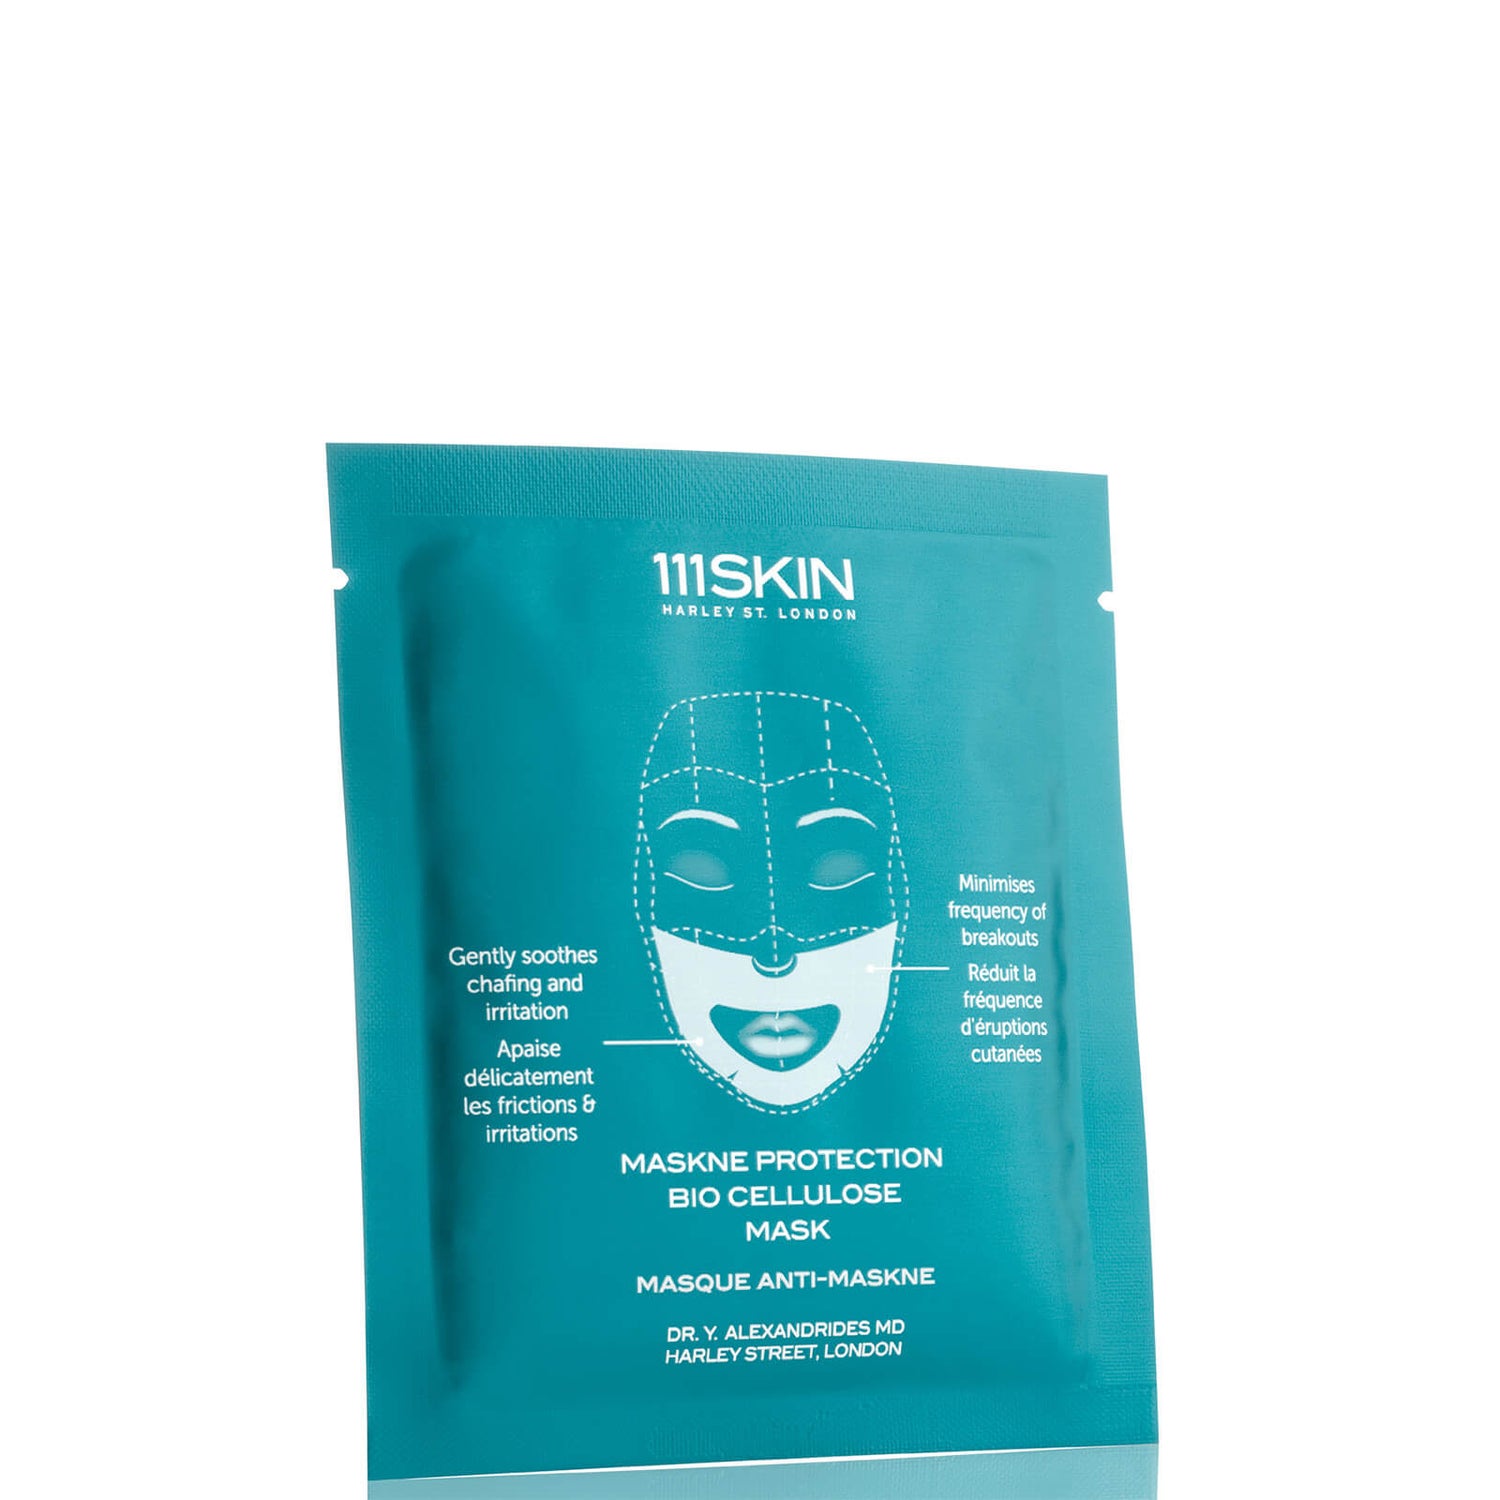 111SKIN Maskne 保护生物纤维素面膜 | 单片